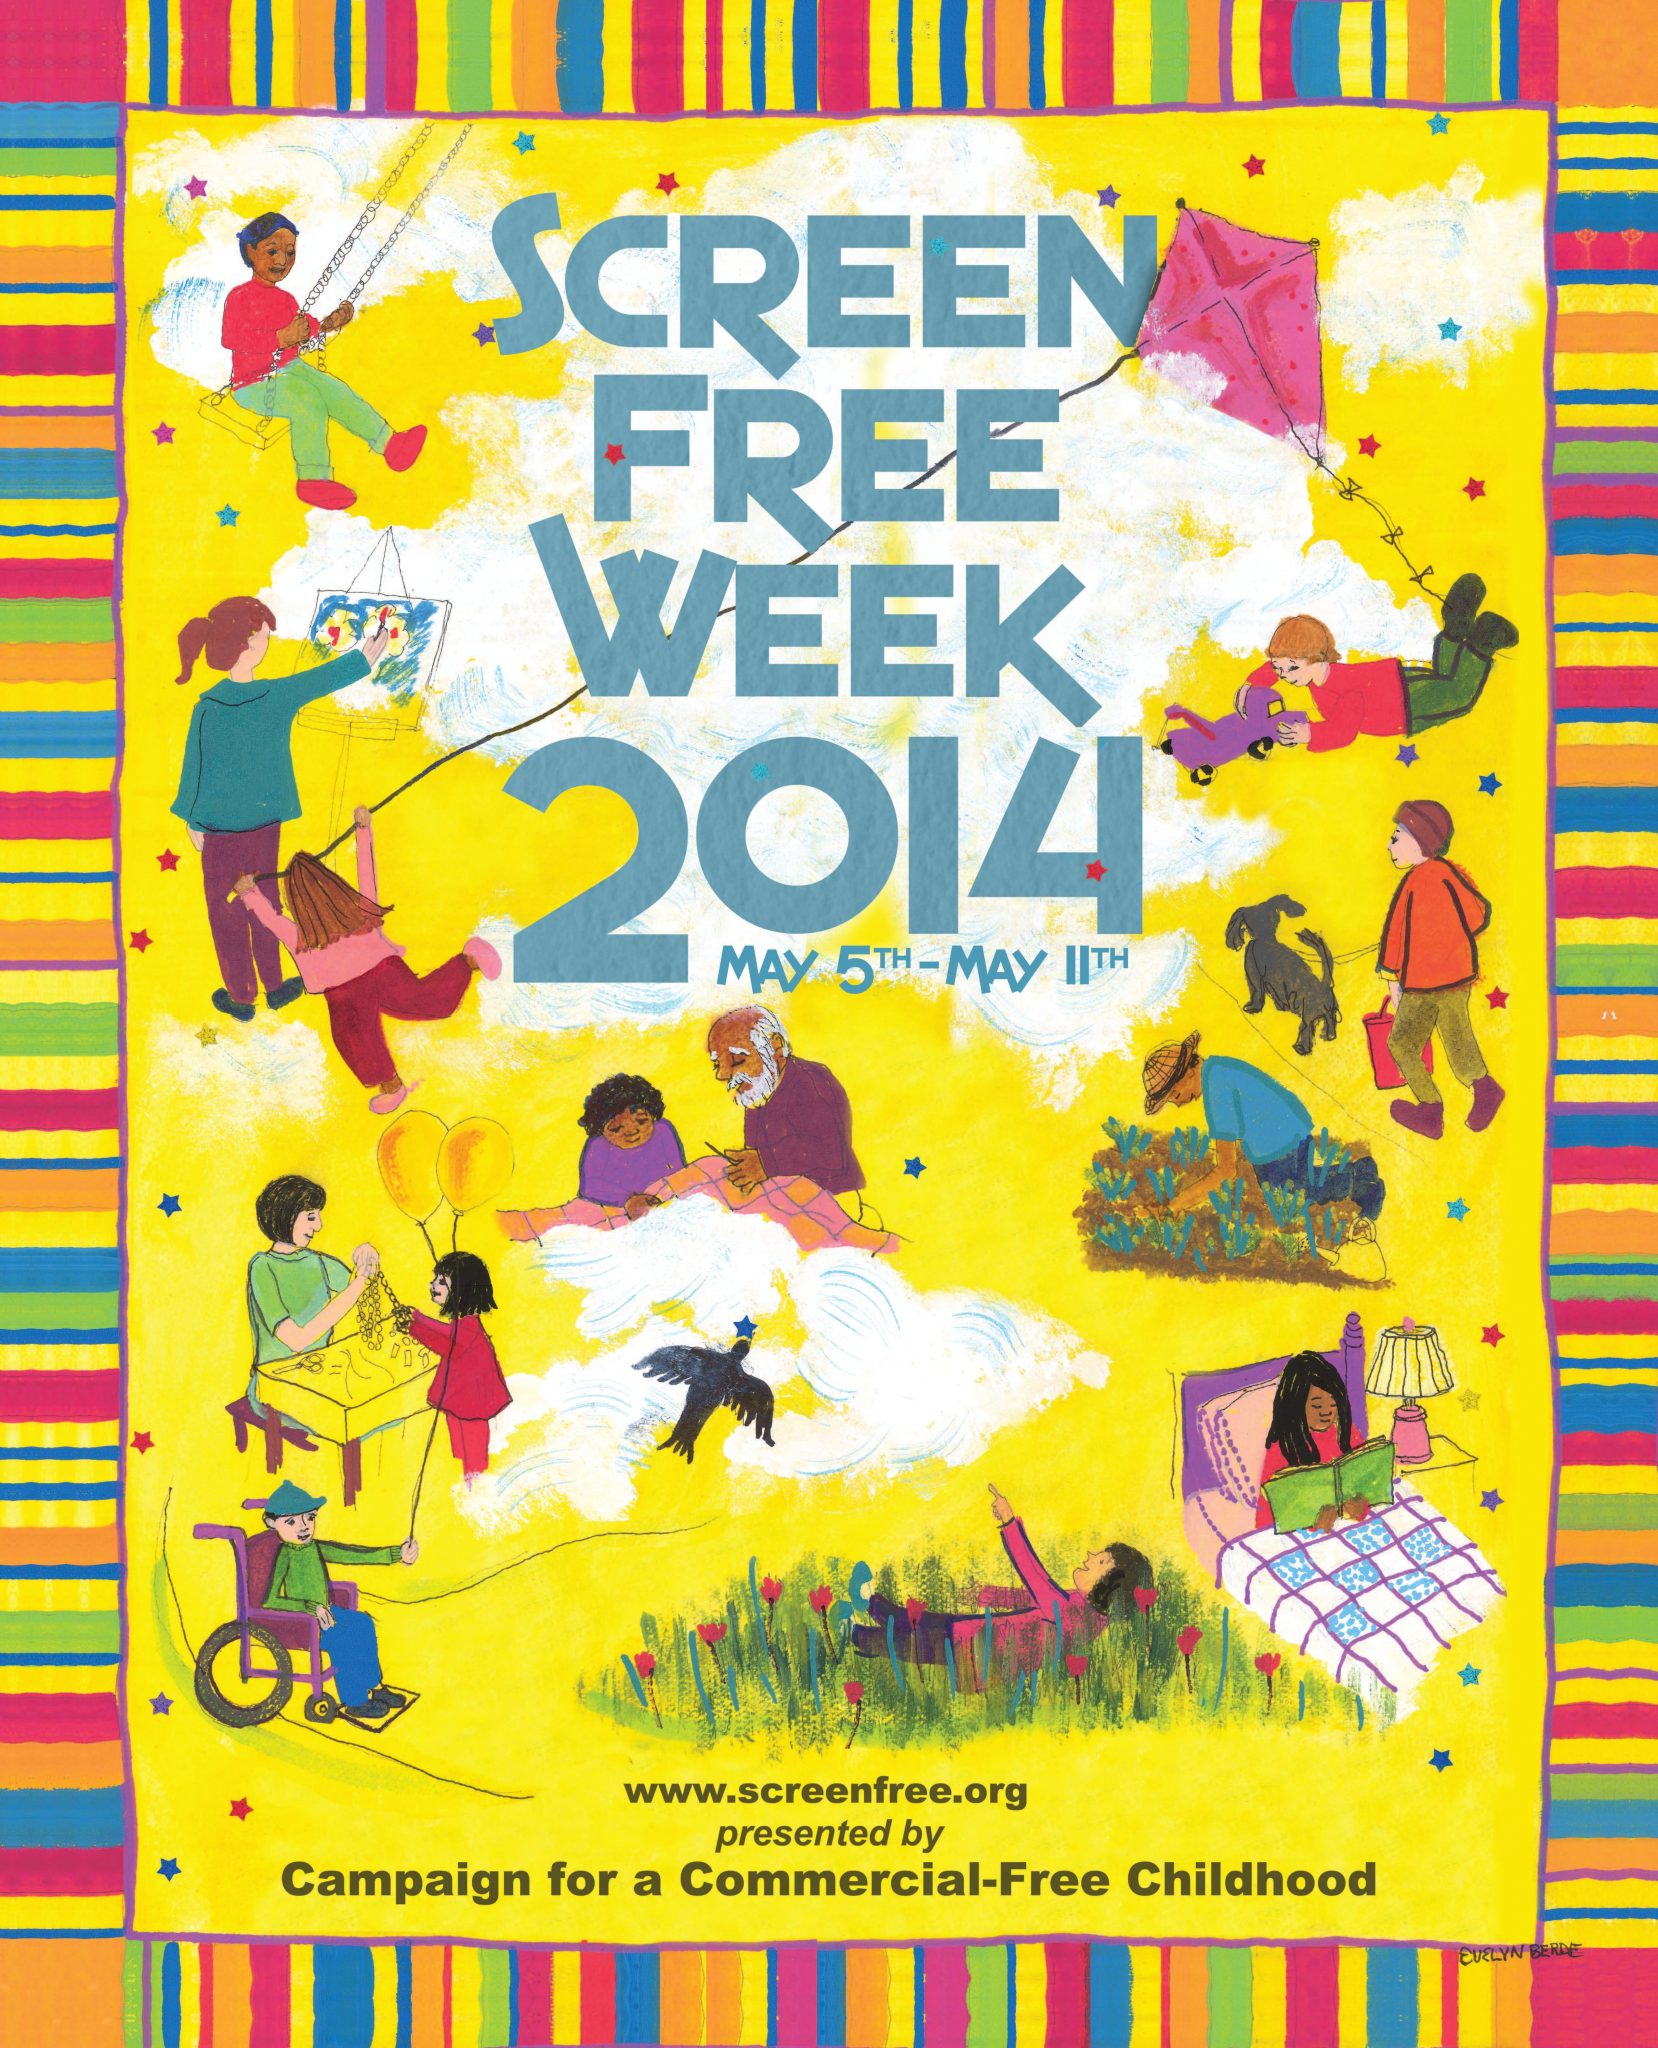 screen-free week